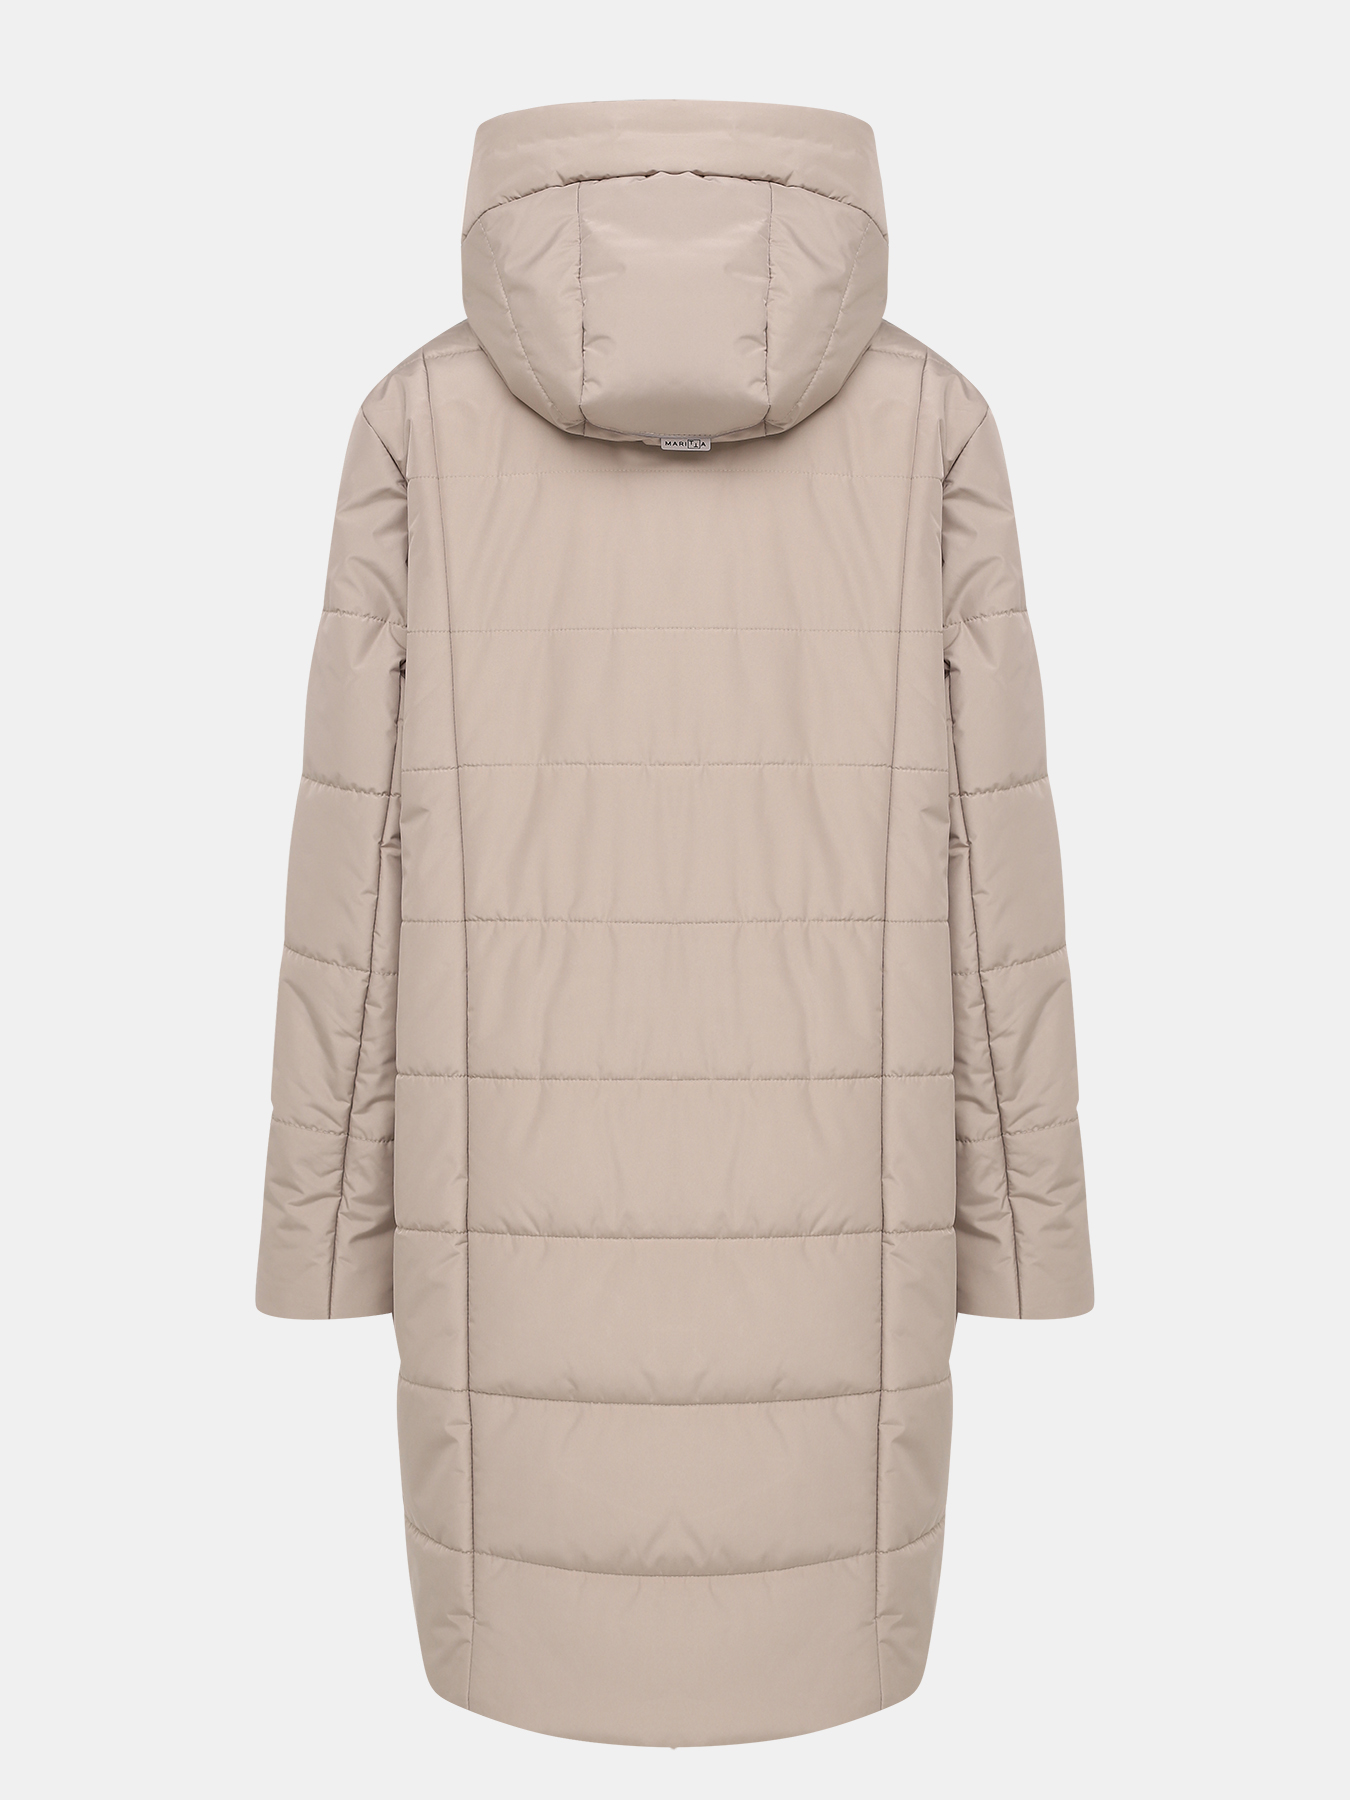 Пальто зимнее Maritta 433536-021, цвет бежевый, размер 46 - фото 2